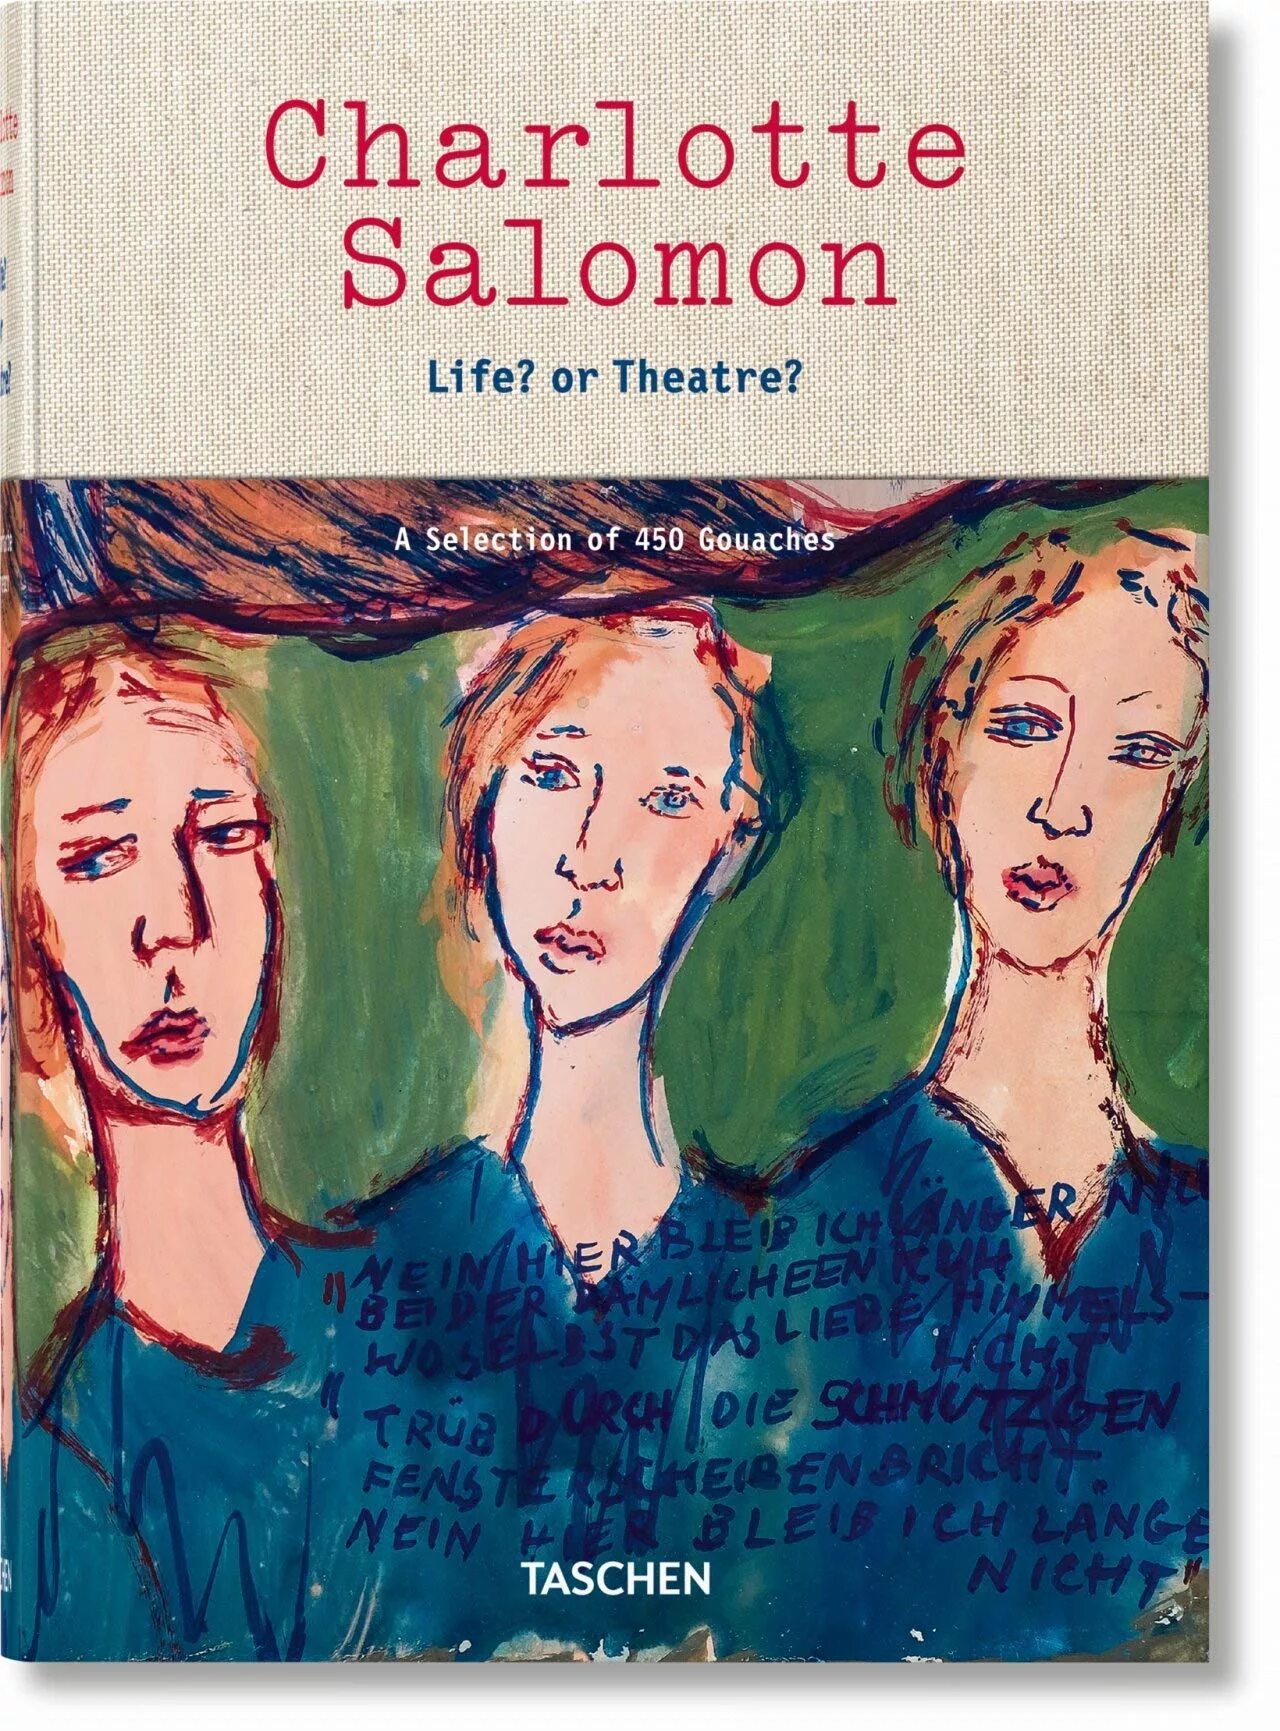 Life is theater. Charlotte Salomon.